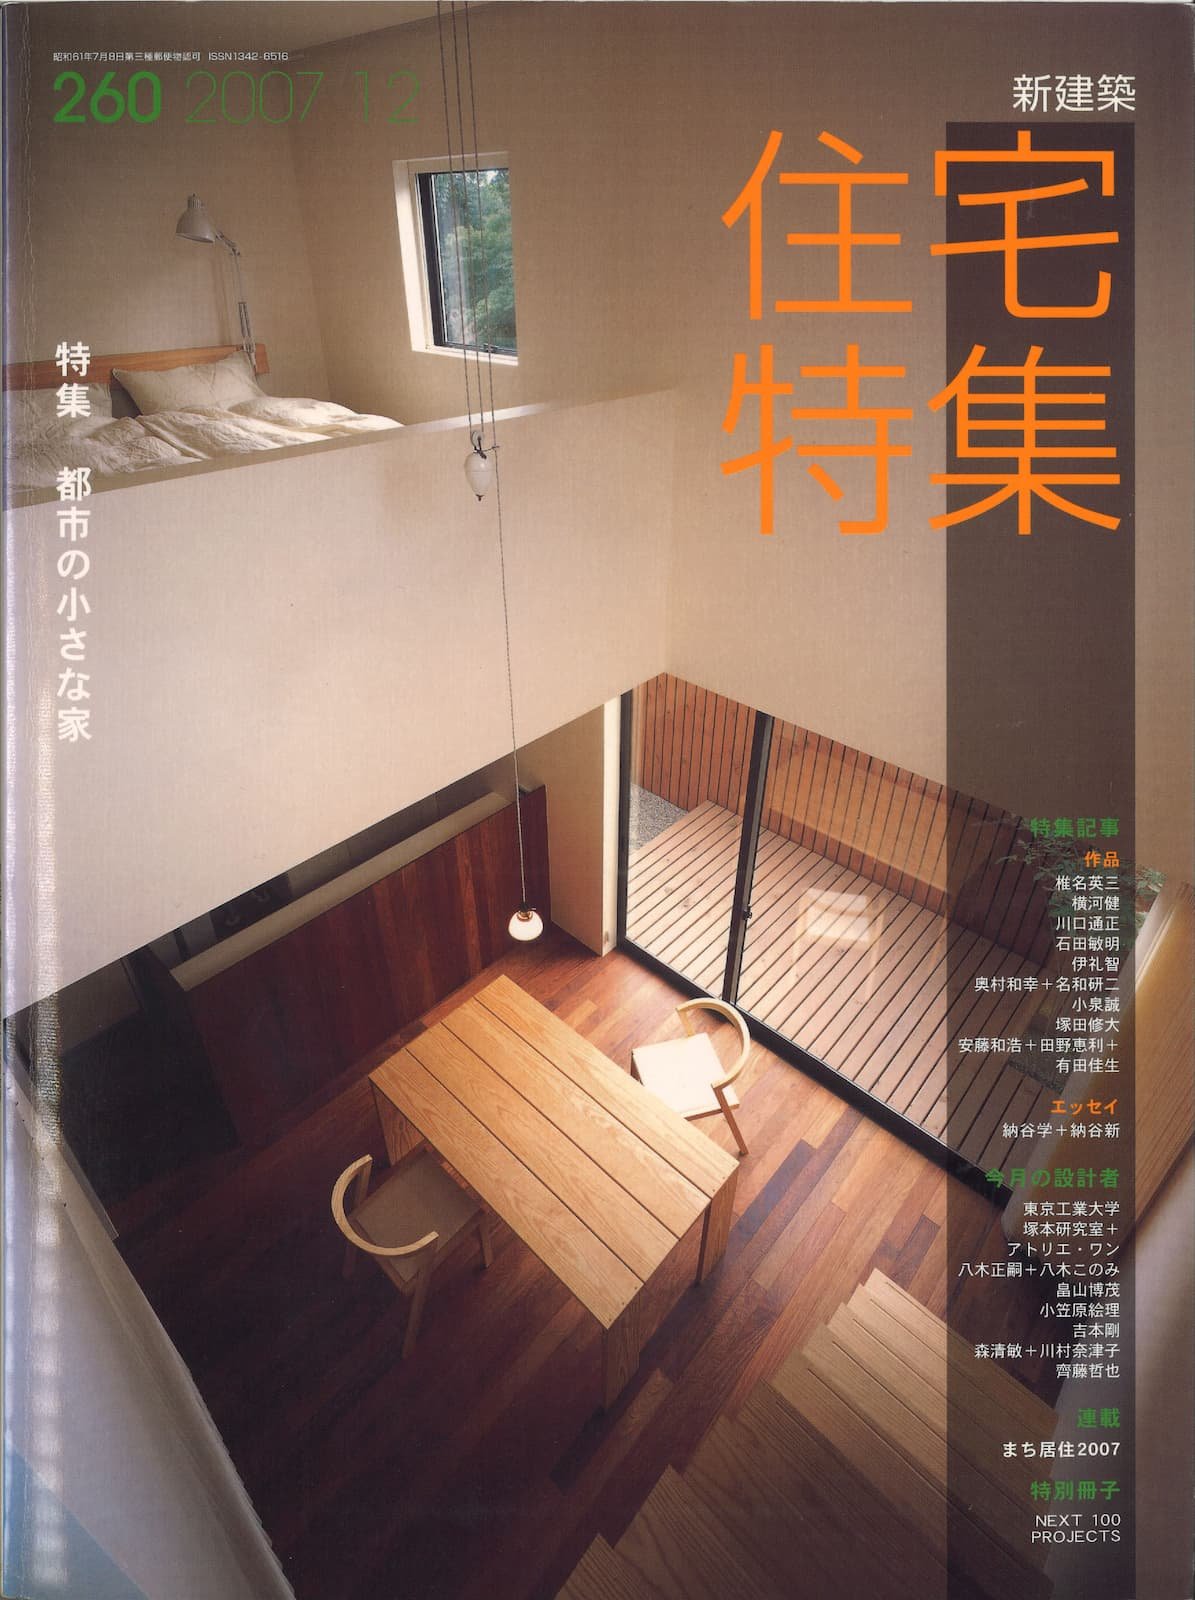 住宅特集 - Housing Special Feature 260 - FU House + Iron House_Page_1.jpg